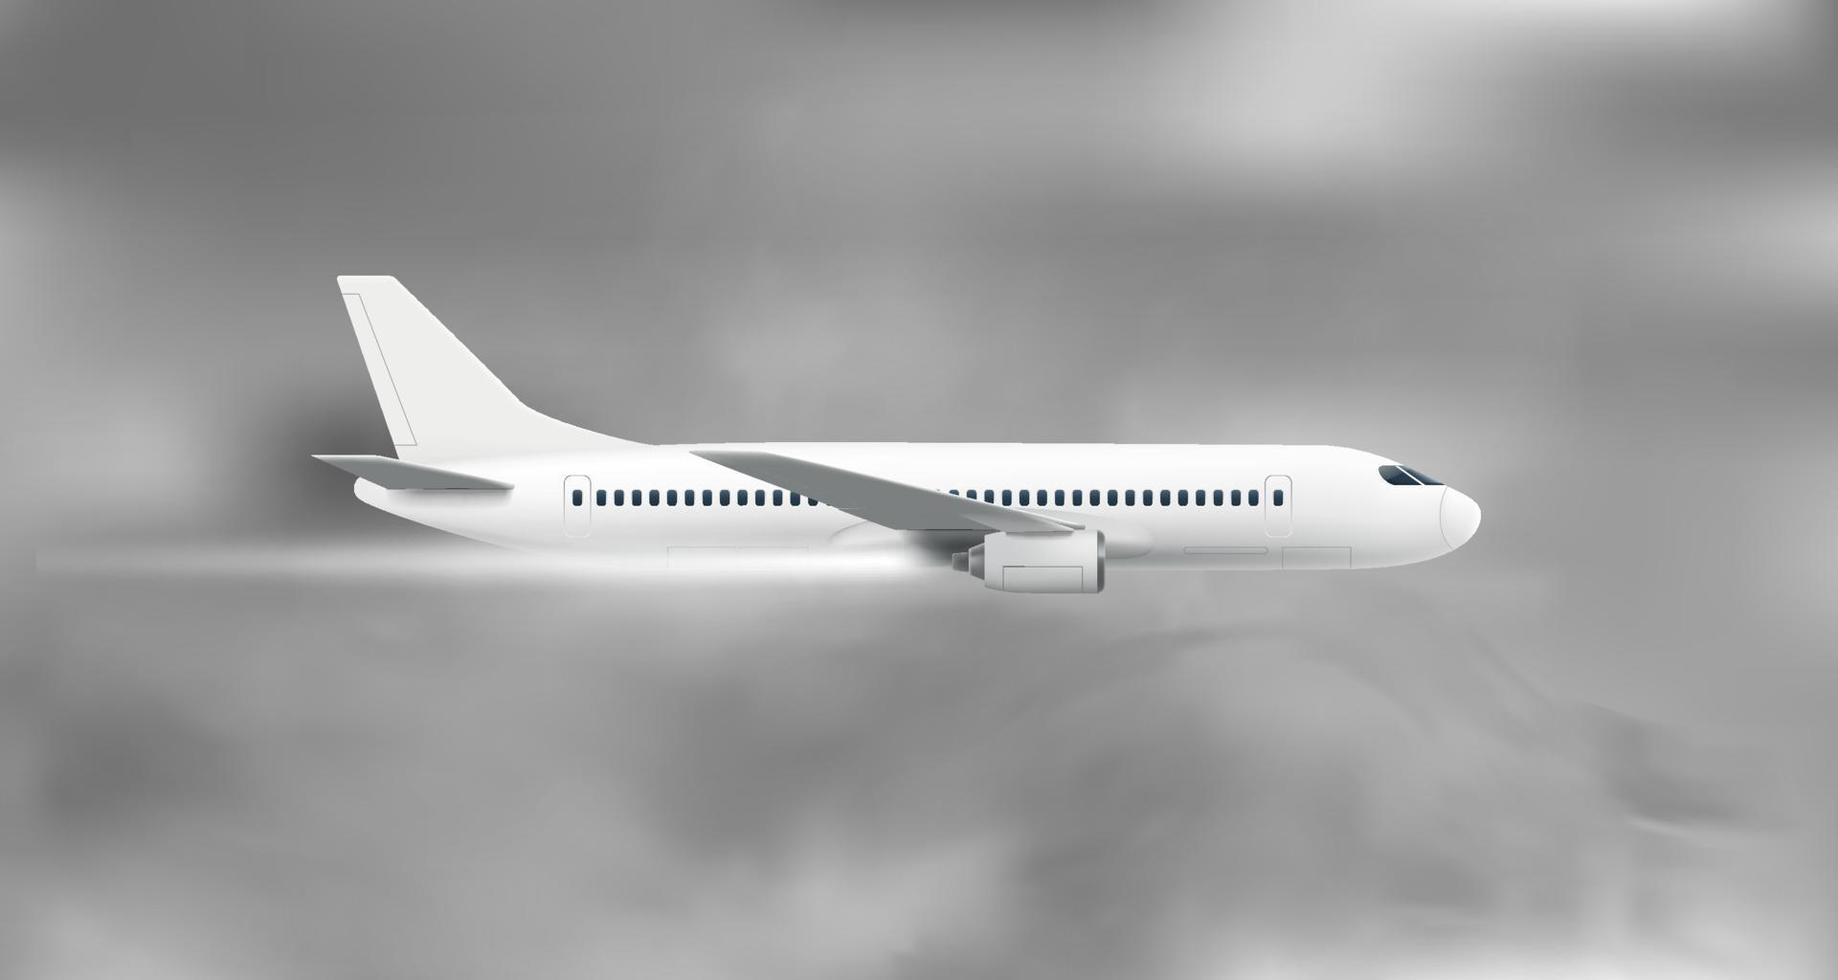 volando un avión moderno volando en un cielo oscuro con nubes. concepto de viaje aéreo. ilustración vectorial 3d vector